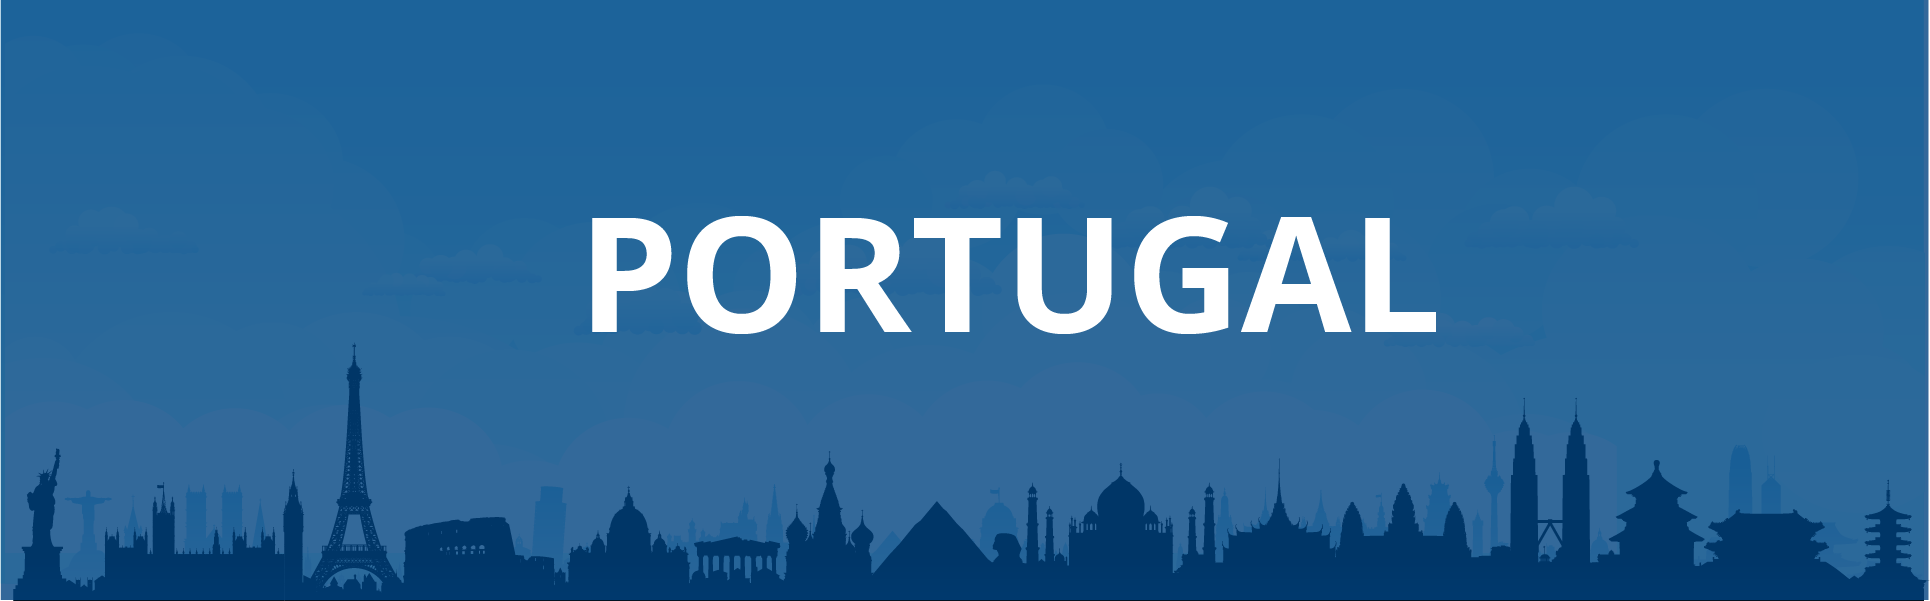 Rl- Portugal